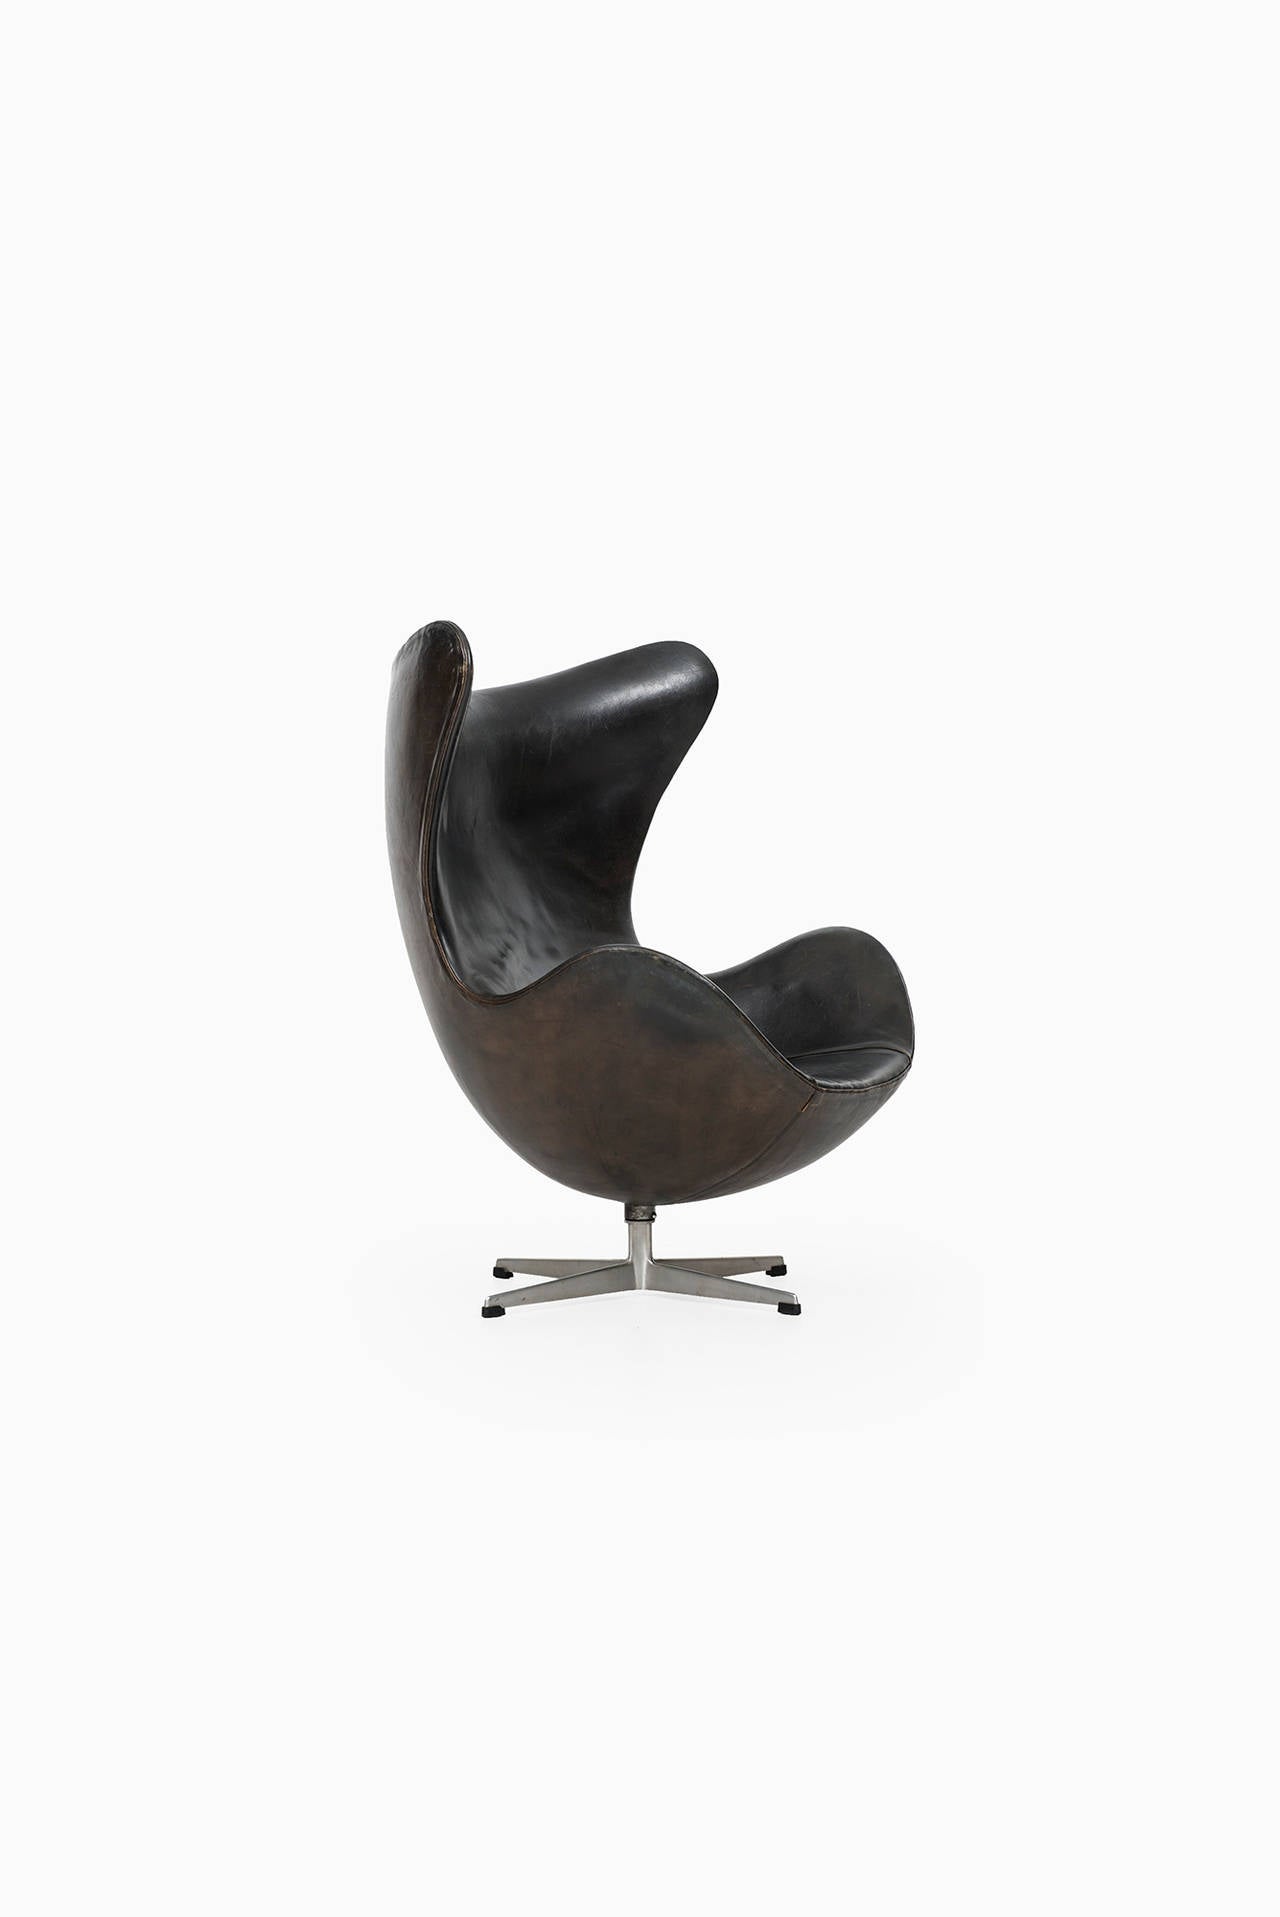 Arne Jacobsen Early Egg Chair in Original Black Leather by Fritz Hansen In Good Condition In Limhamn, Skåne län